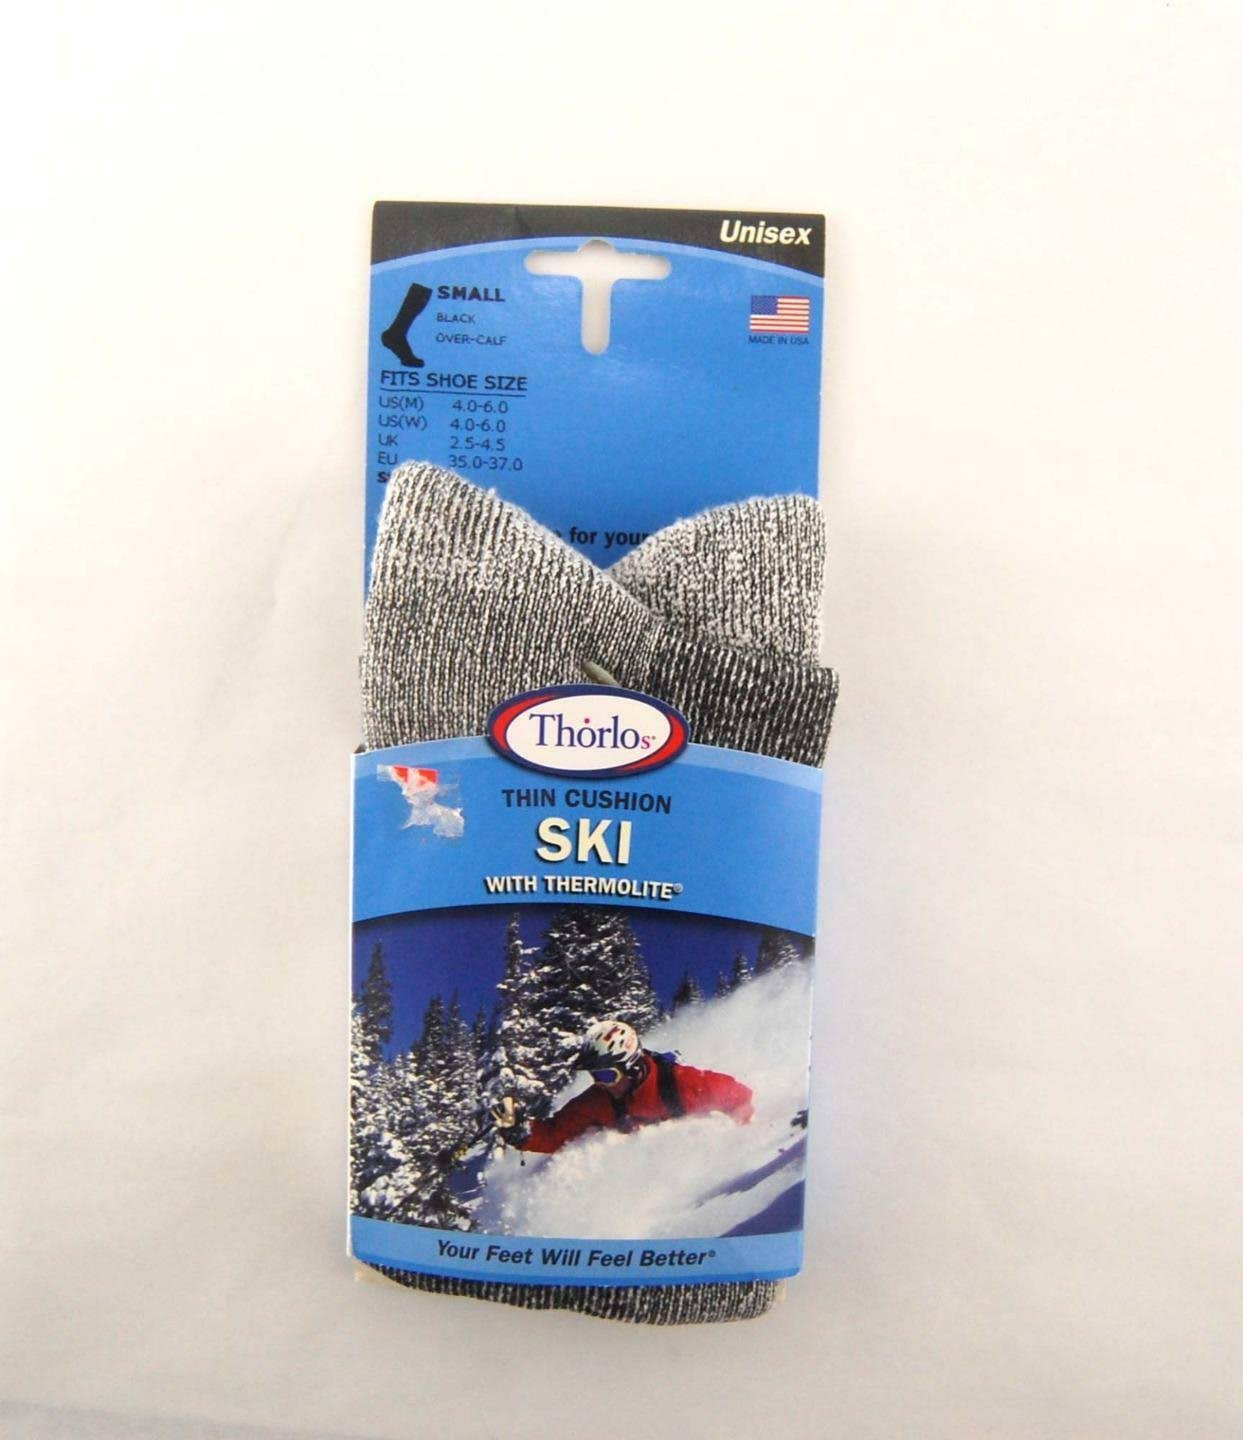 New Thorlos Ski Thin Cushion Thermolite Black Over-Calf Socks Small